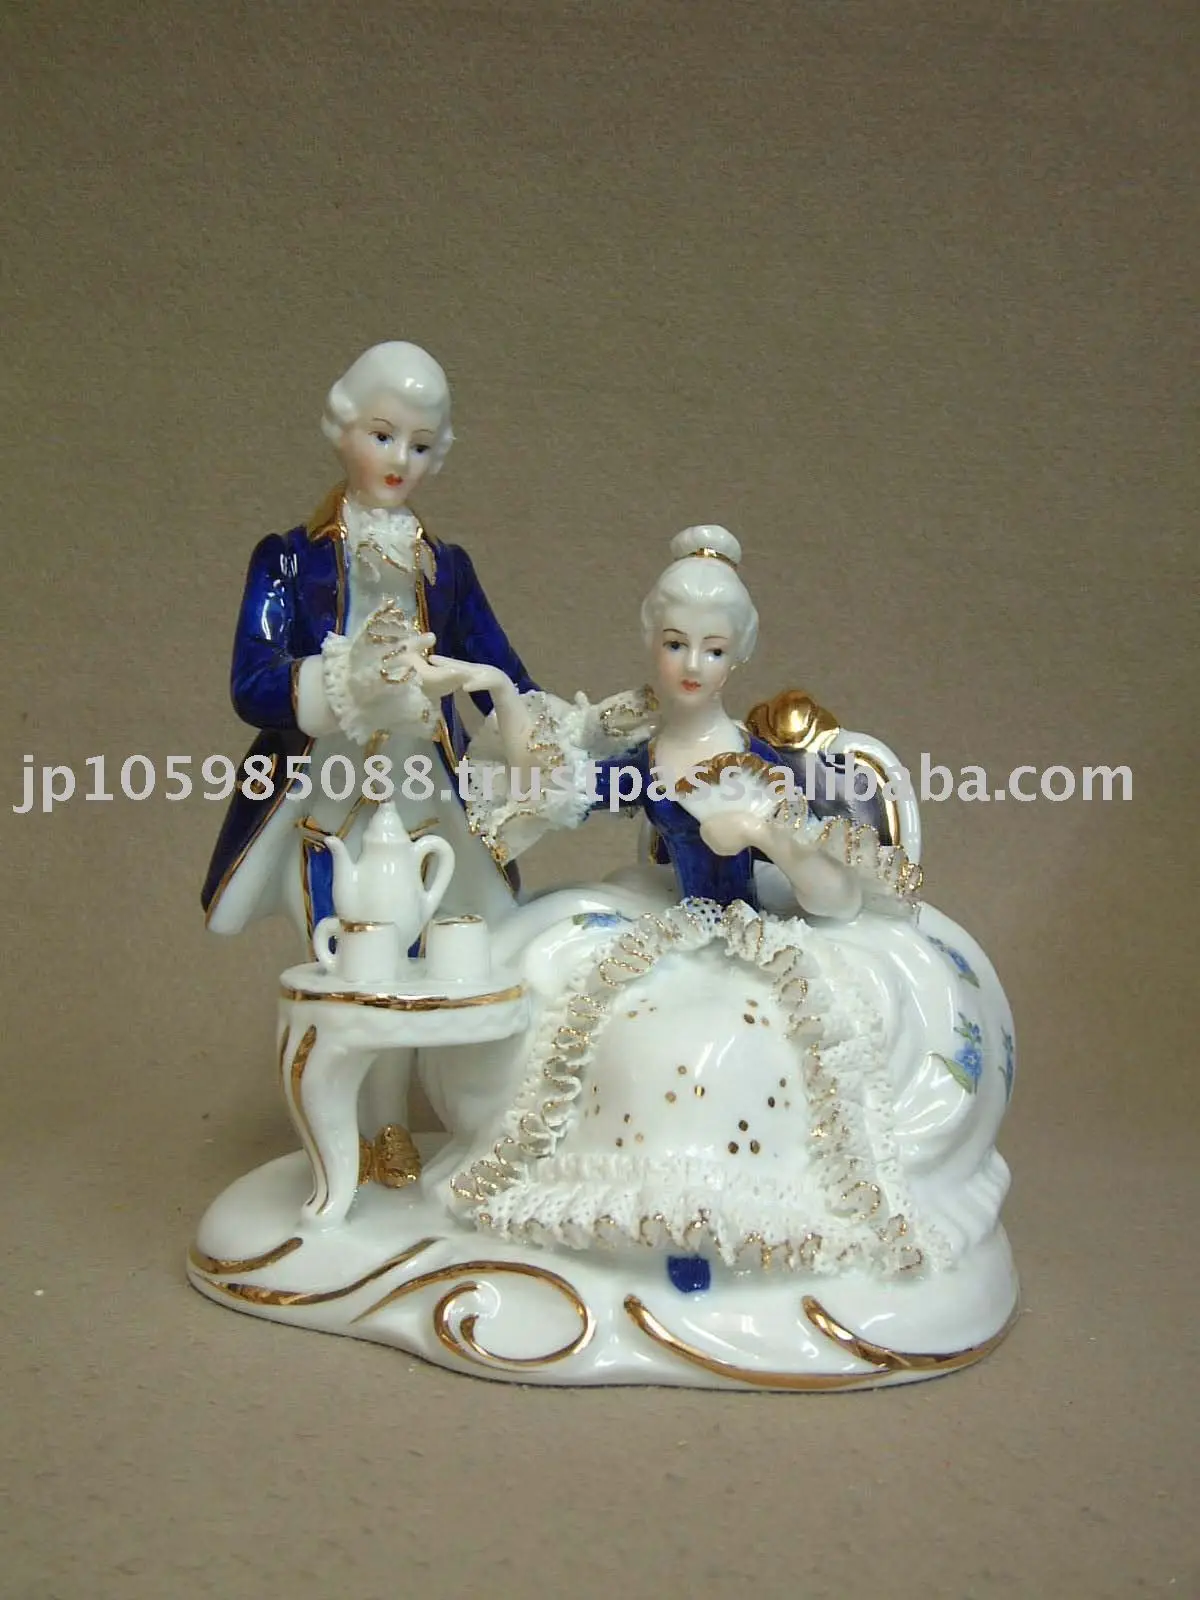 porcelain doll figurines